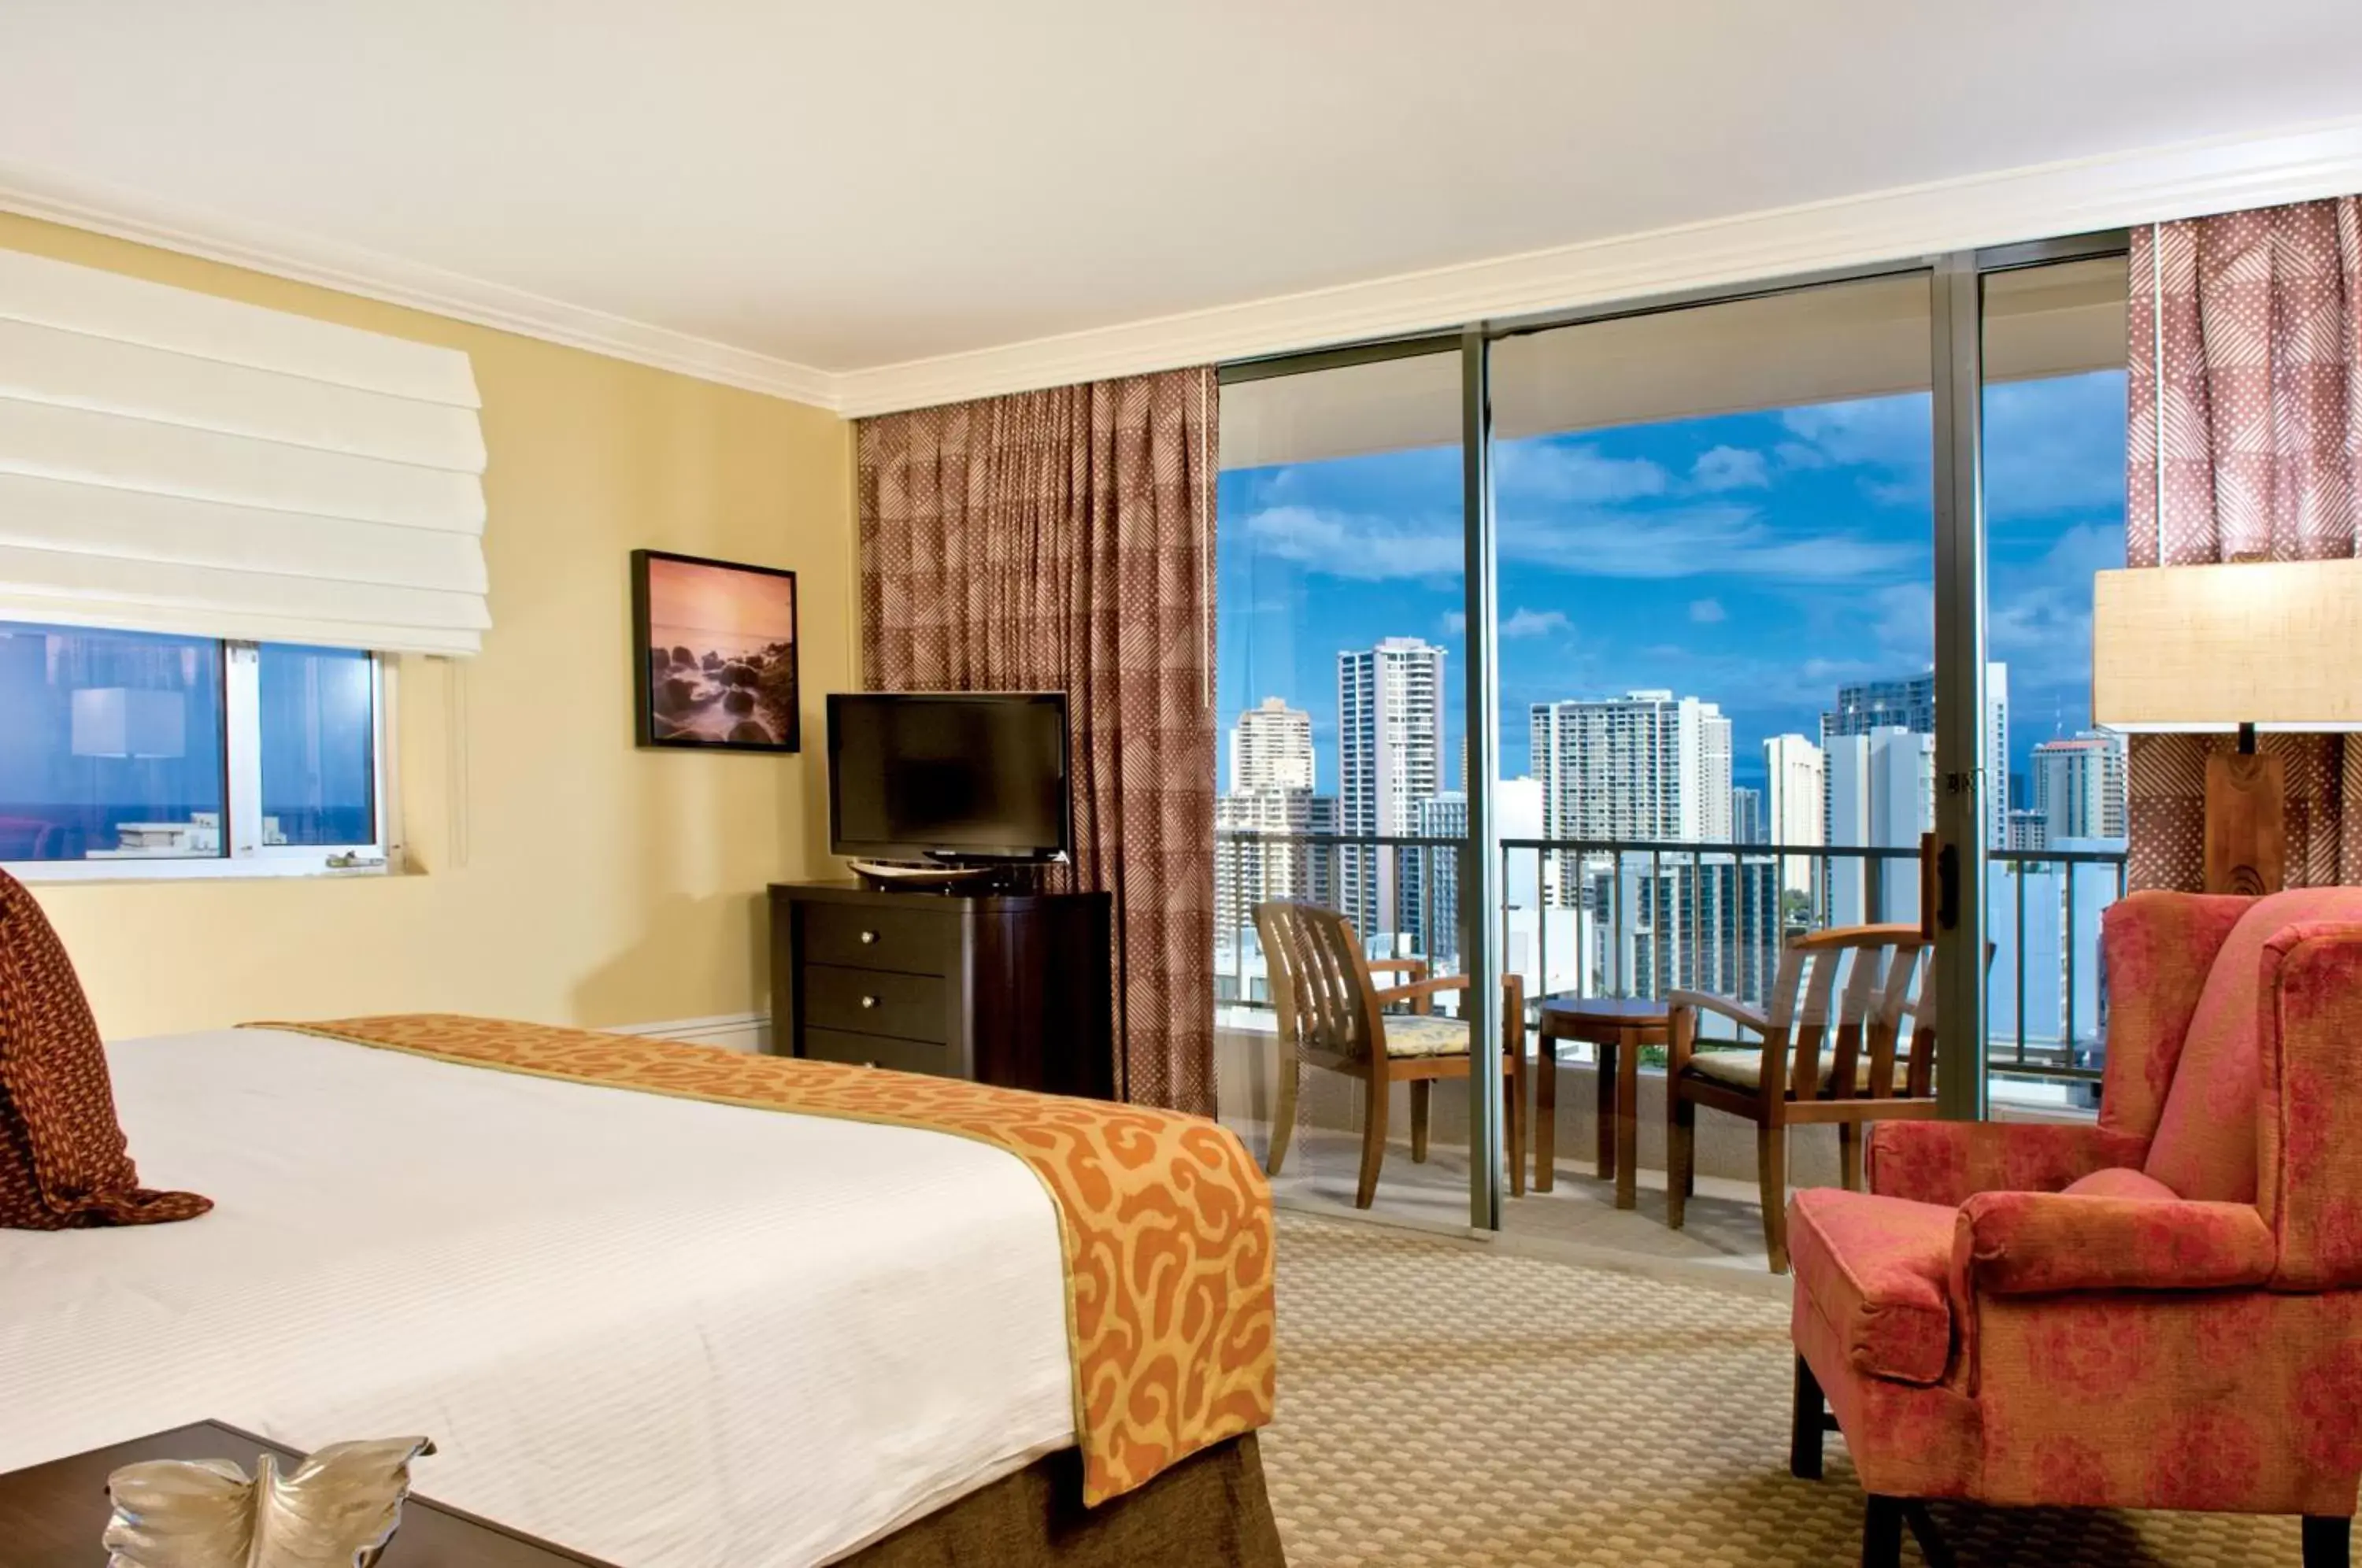 Bedroom in Wyndham Vacation Resorts Royal Garden at Waikiki